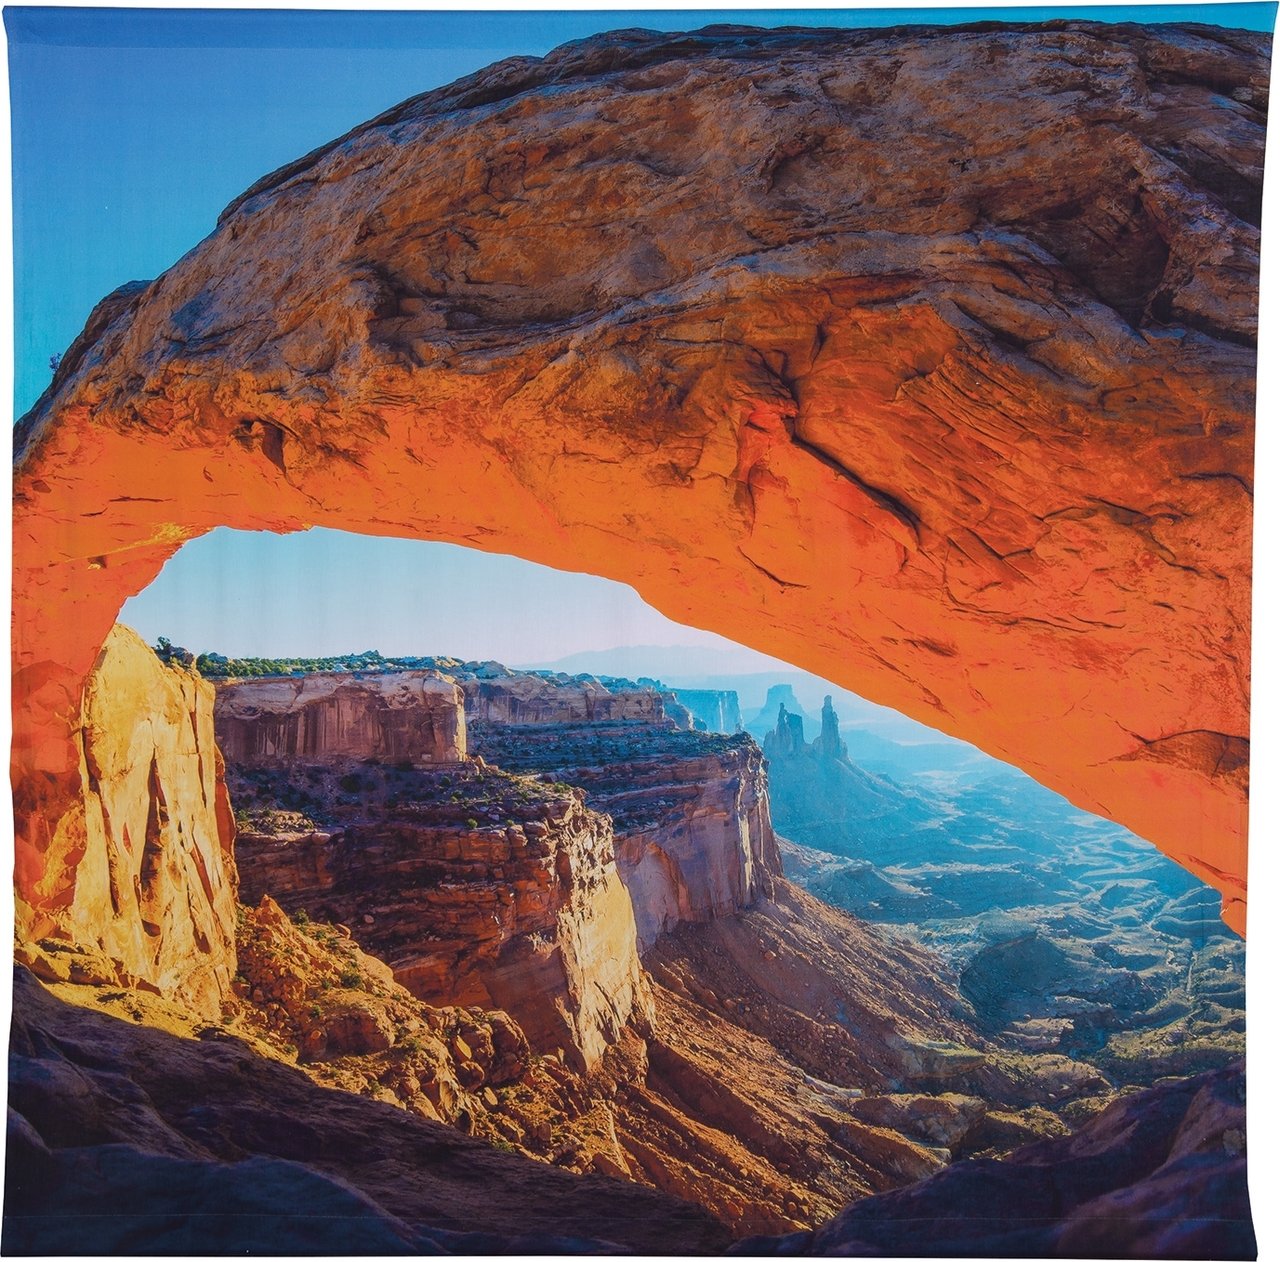 BLOWOUT Mesa Arch Photo Tapestry - (Medium, 4.8 X 4.8 Feet, 100% Cotton, Fair Trade Certified) - PaperLanternStore.com - Paper Lanterns, Decor, Party Lights & More